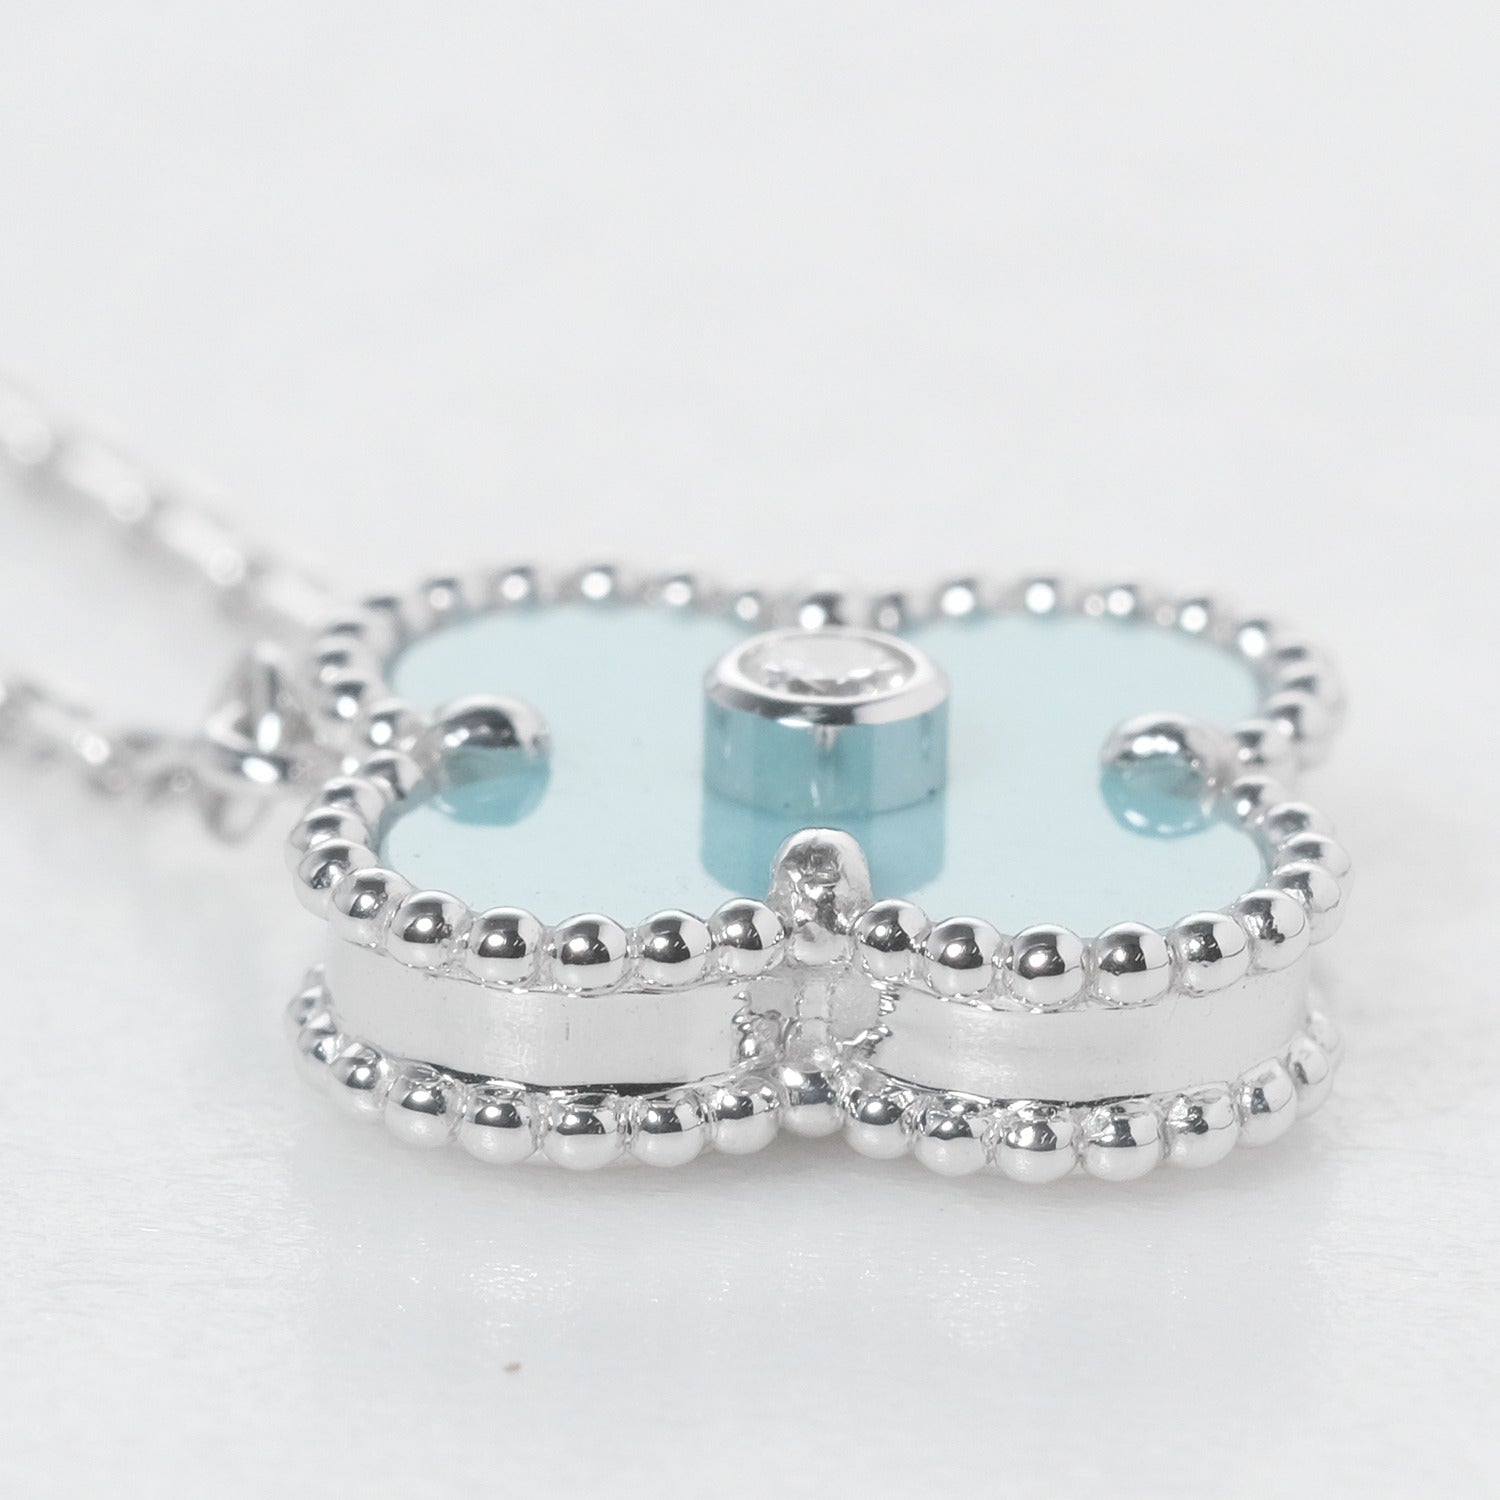 Van Cleef &amp; Arpels vint Alhambra necklace 2022 holid VCARP9RU00 K18 WG white g diamond  7.32g  quality clay